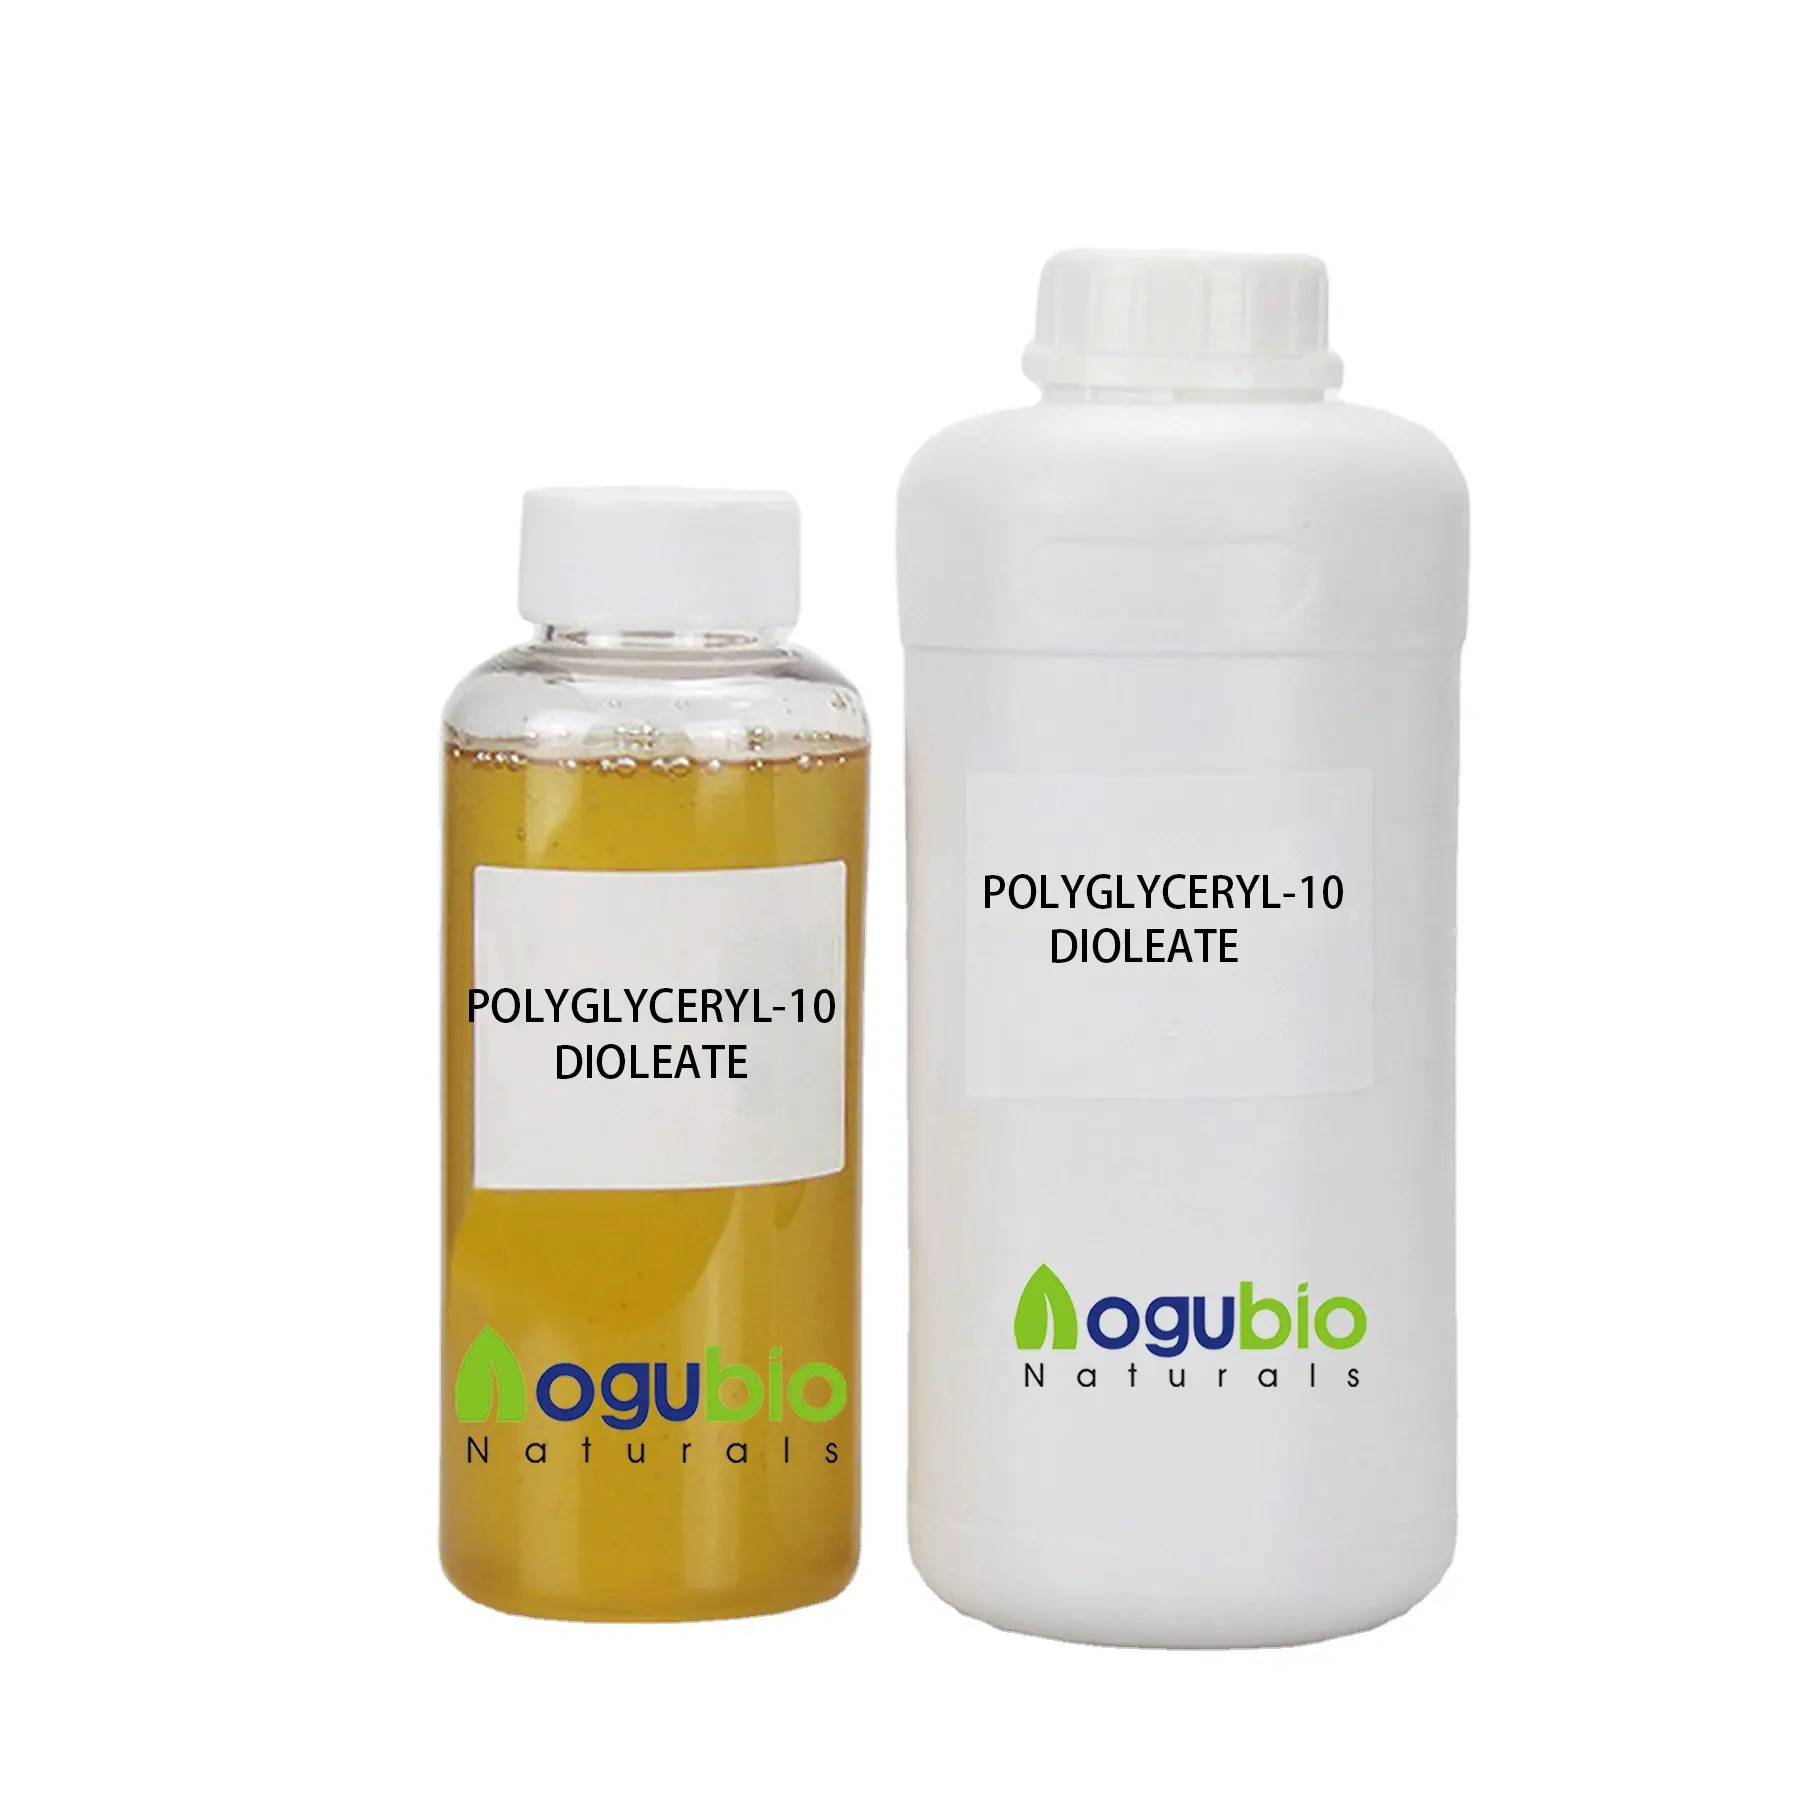 POLYGLYCERYL-10 DIOLEATE는 페이셜 클렌저 비누에 사용되는 유화제로서 특정 용해도를 가지고 있습니다